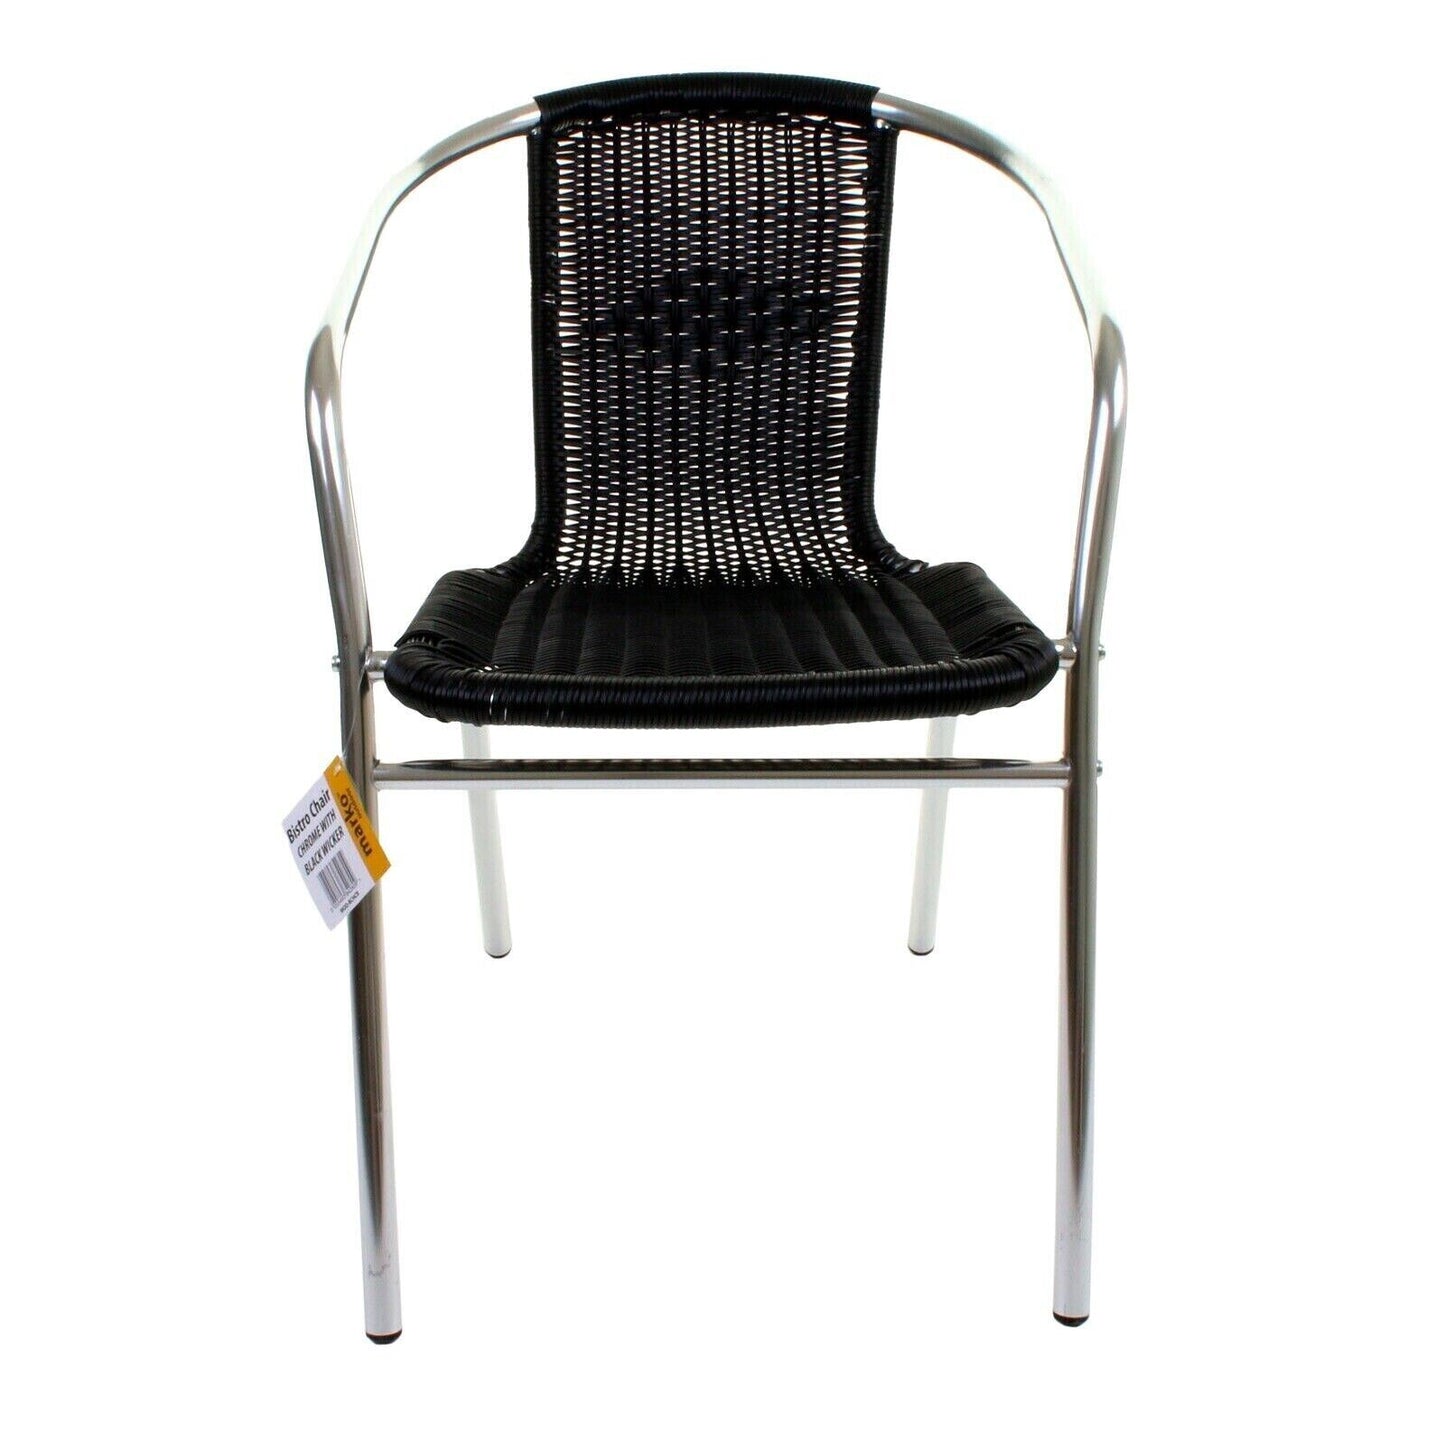 5PC Chrome Black Wicker Chair with Aluminium Chrome 60cm Round Table